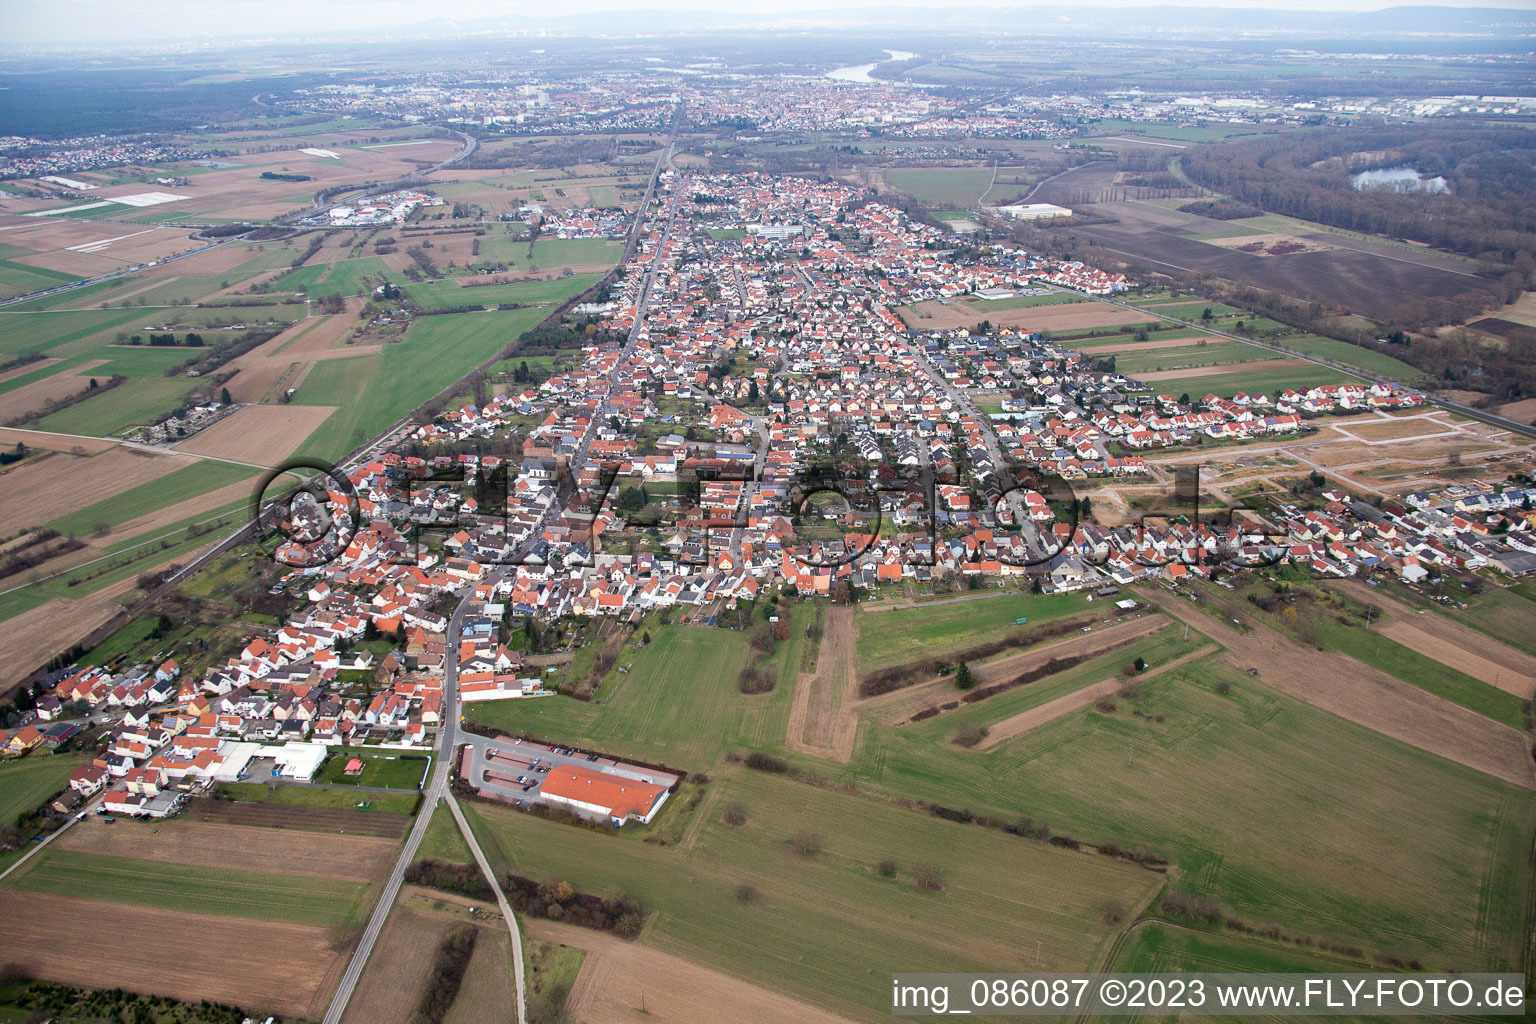 Aerial view of District Heiligenstein in Römerberg in the state Rhineland-Palatinate, Germany